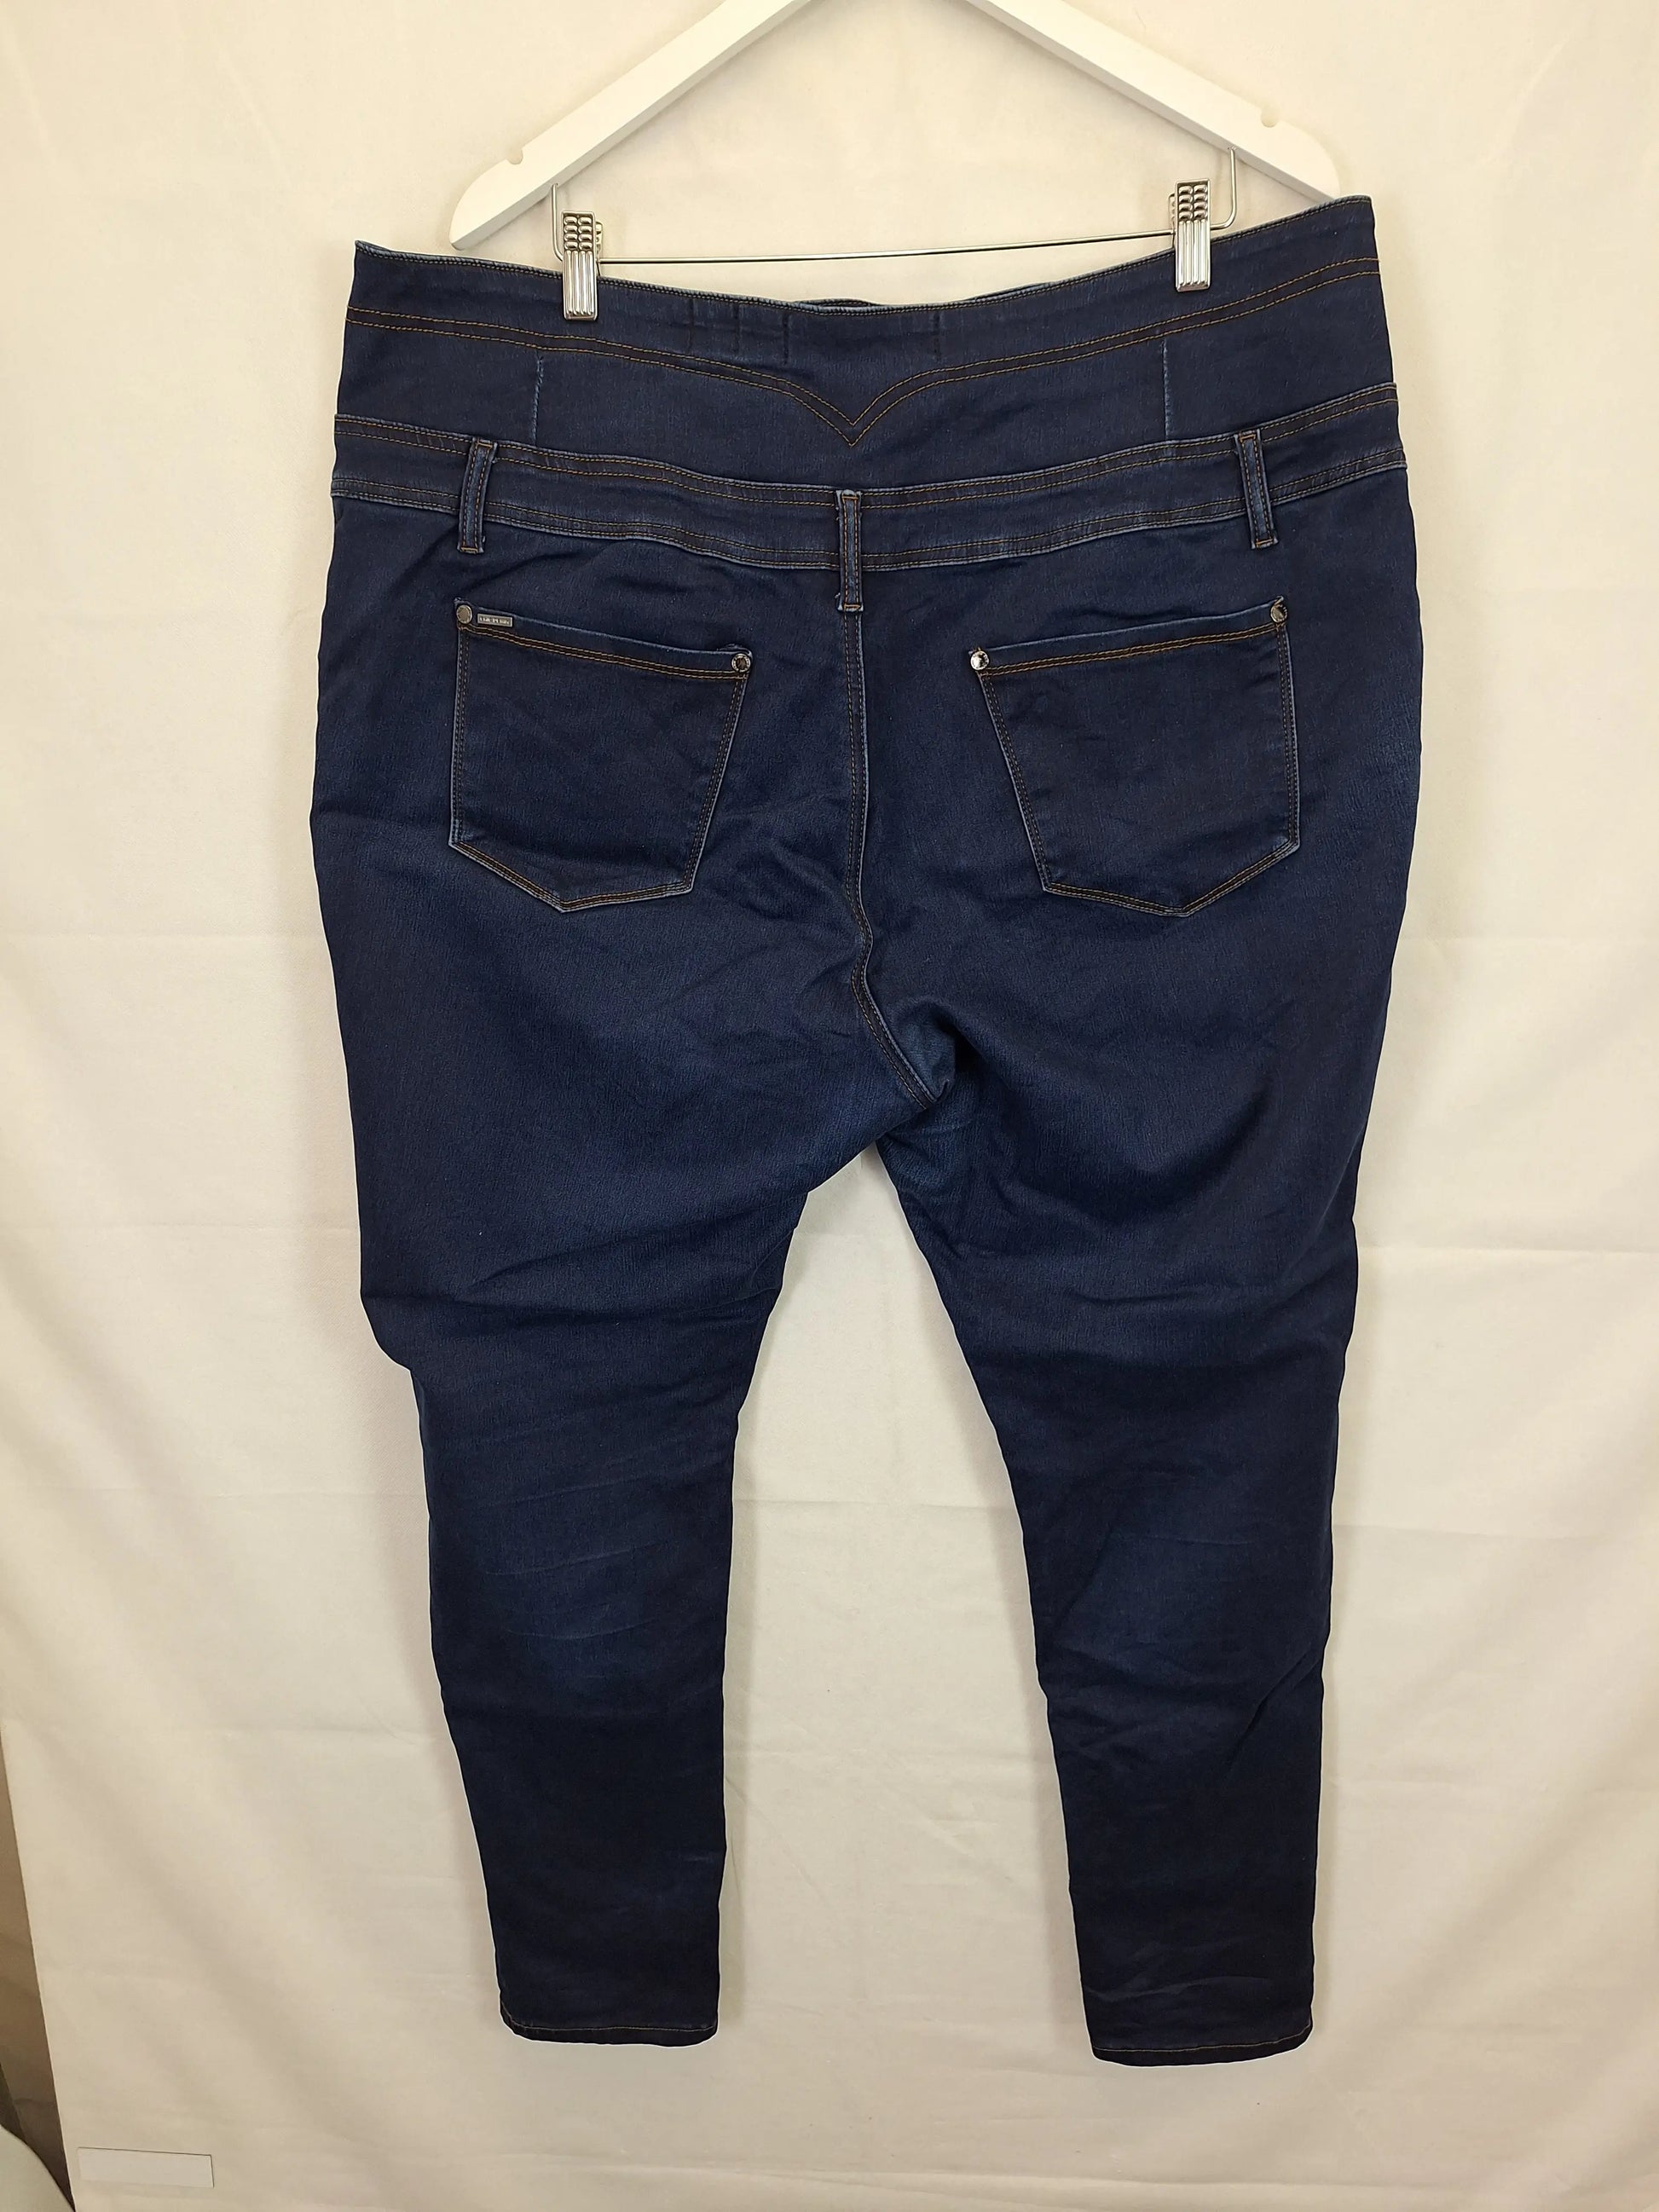 City Chic Dark Wash Skinny Denim Jeans Size 20 by SwapUp-Online Second Hand Store-Online Thrift Store